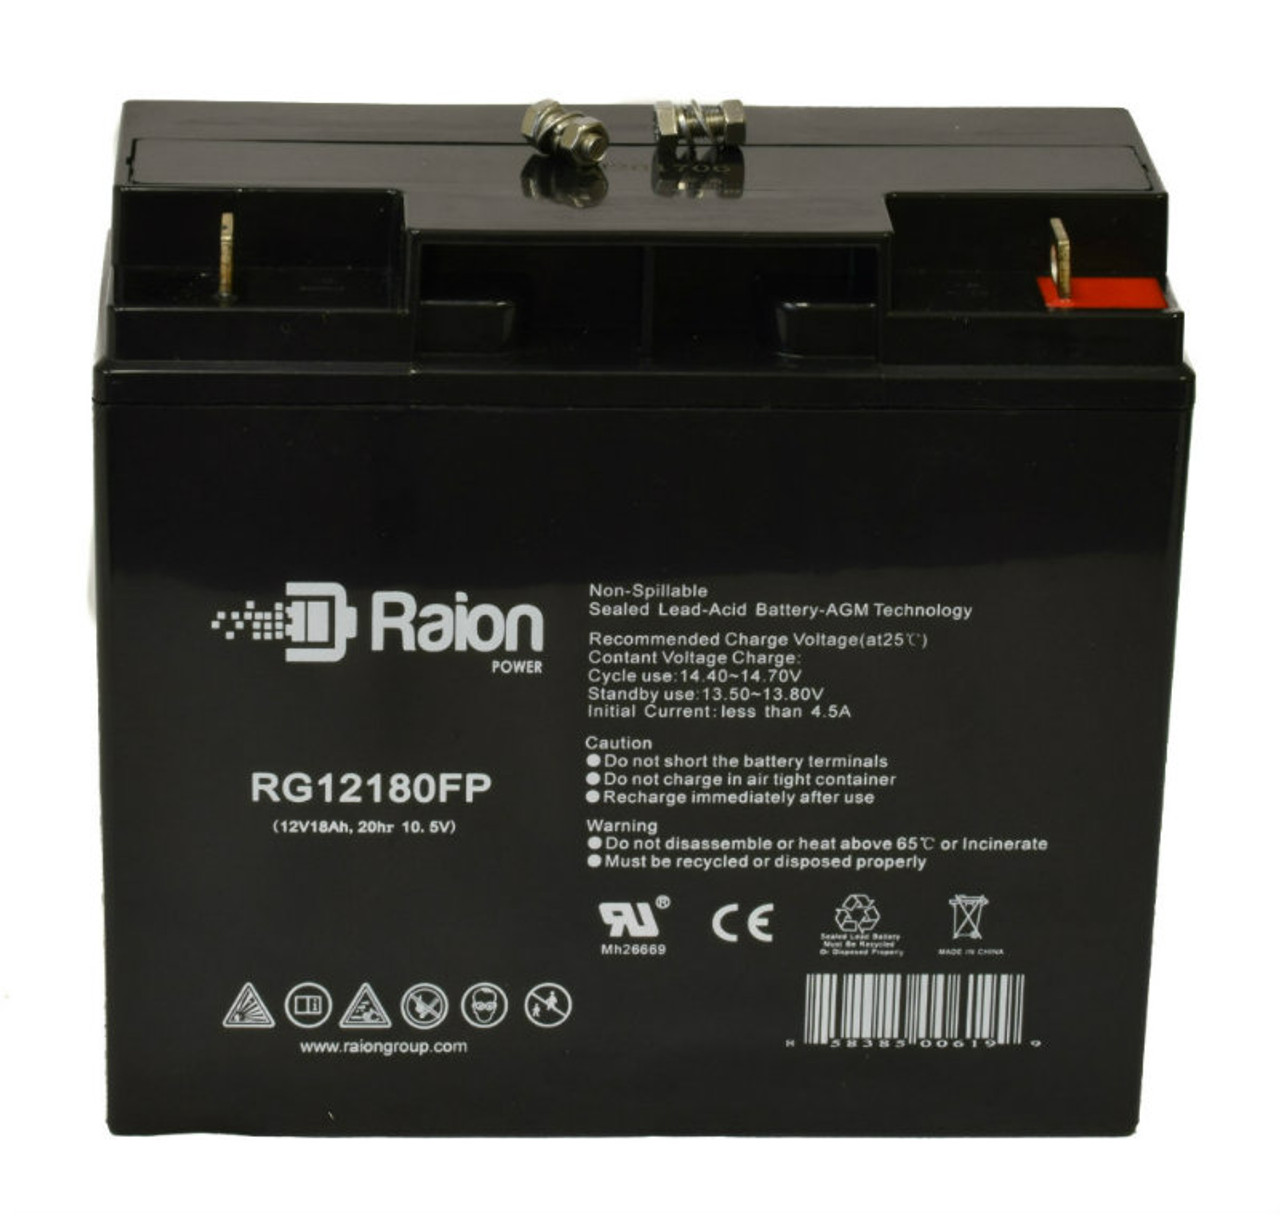 Raion Power RG12180FP 12V 18Ah Lead Acid Battery for Mule PM12170